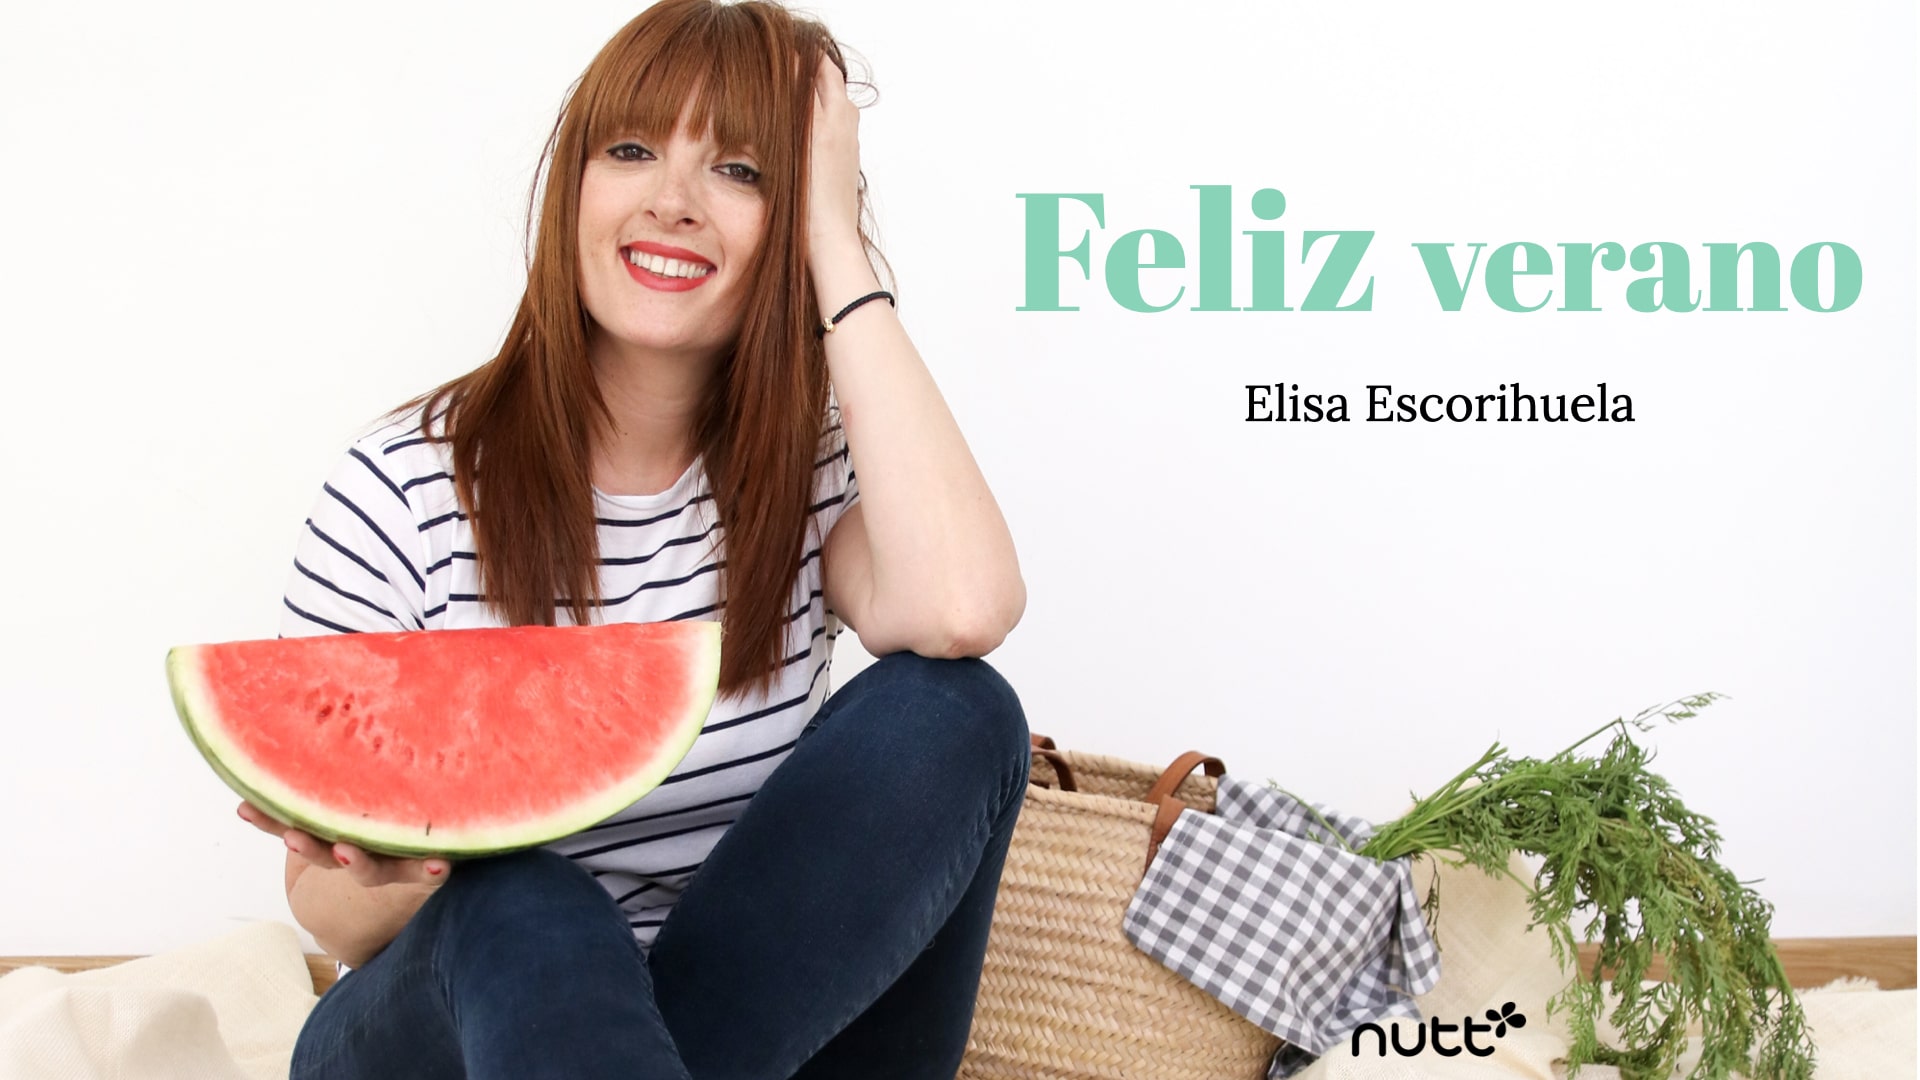 Feliz verano Elisa Escorihuela